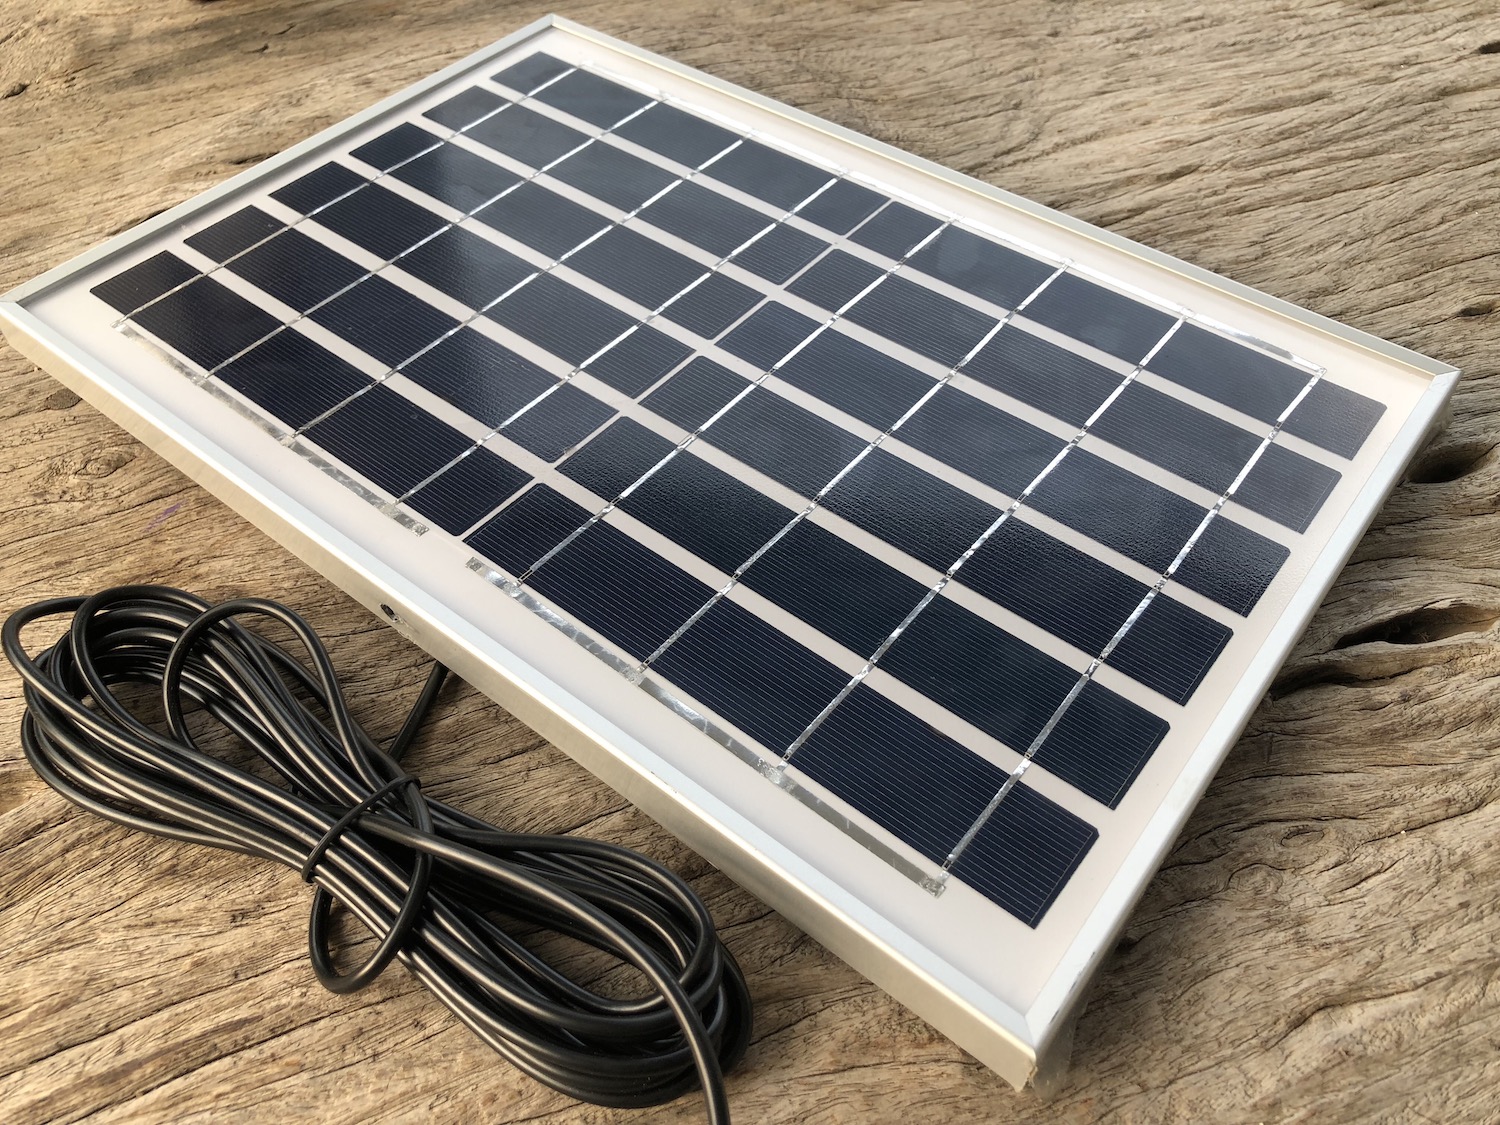 solar-panel-closeup-on-wooden-table-background-2022-11-04-00-56-12-utc